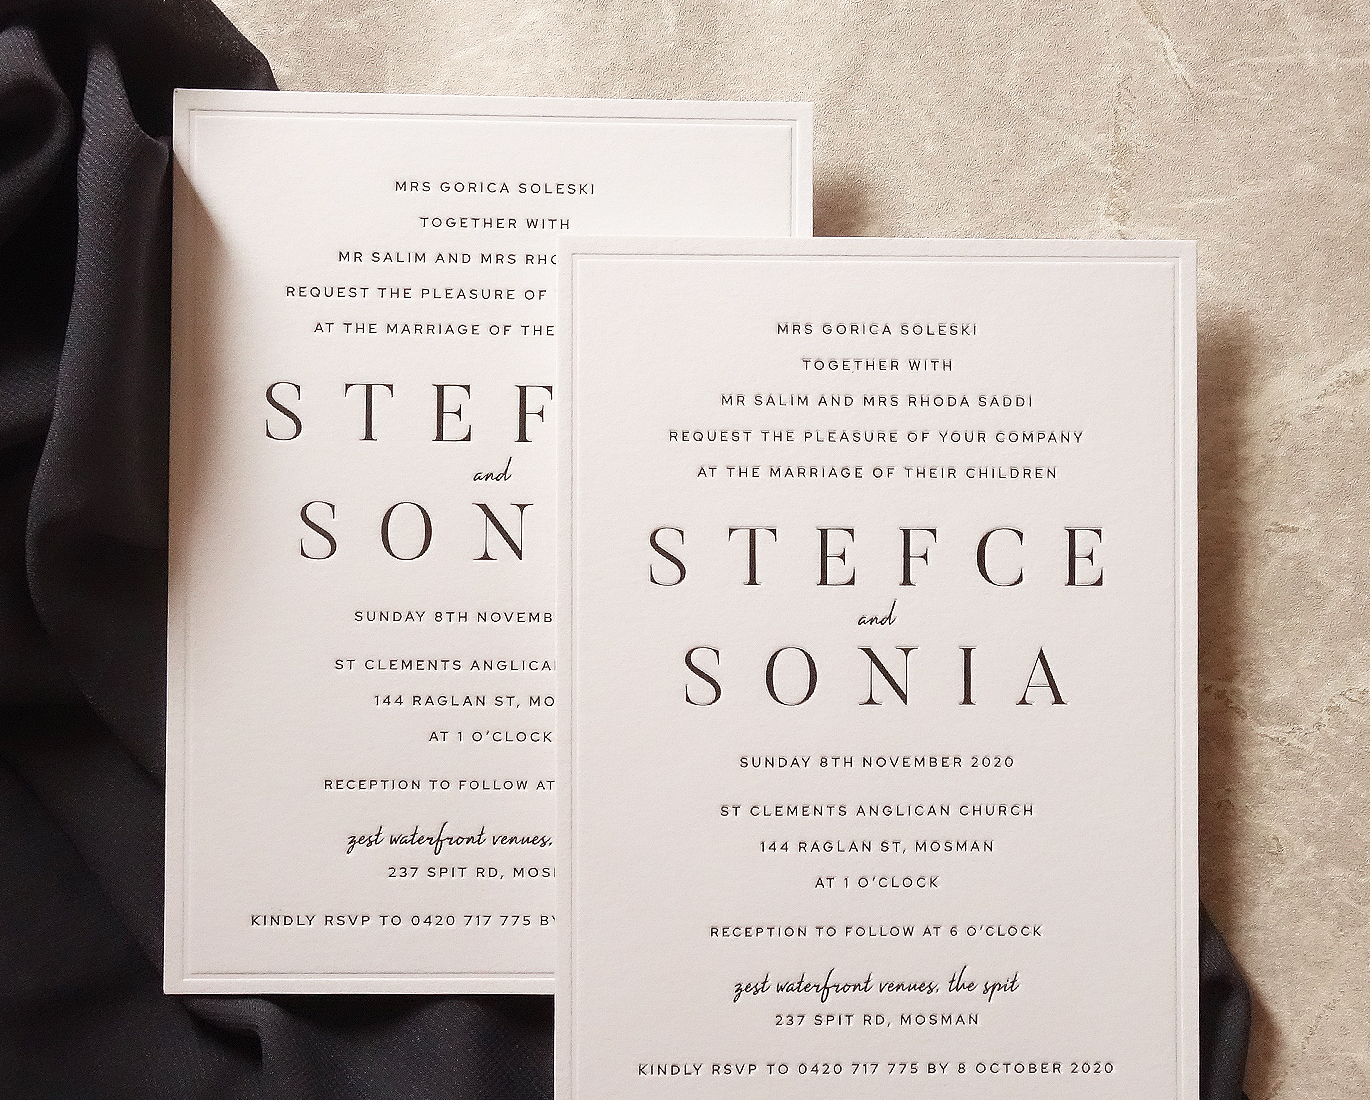 special finishing digital papermint custom wedding invitation and stationery design